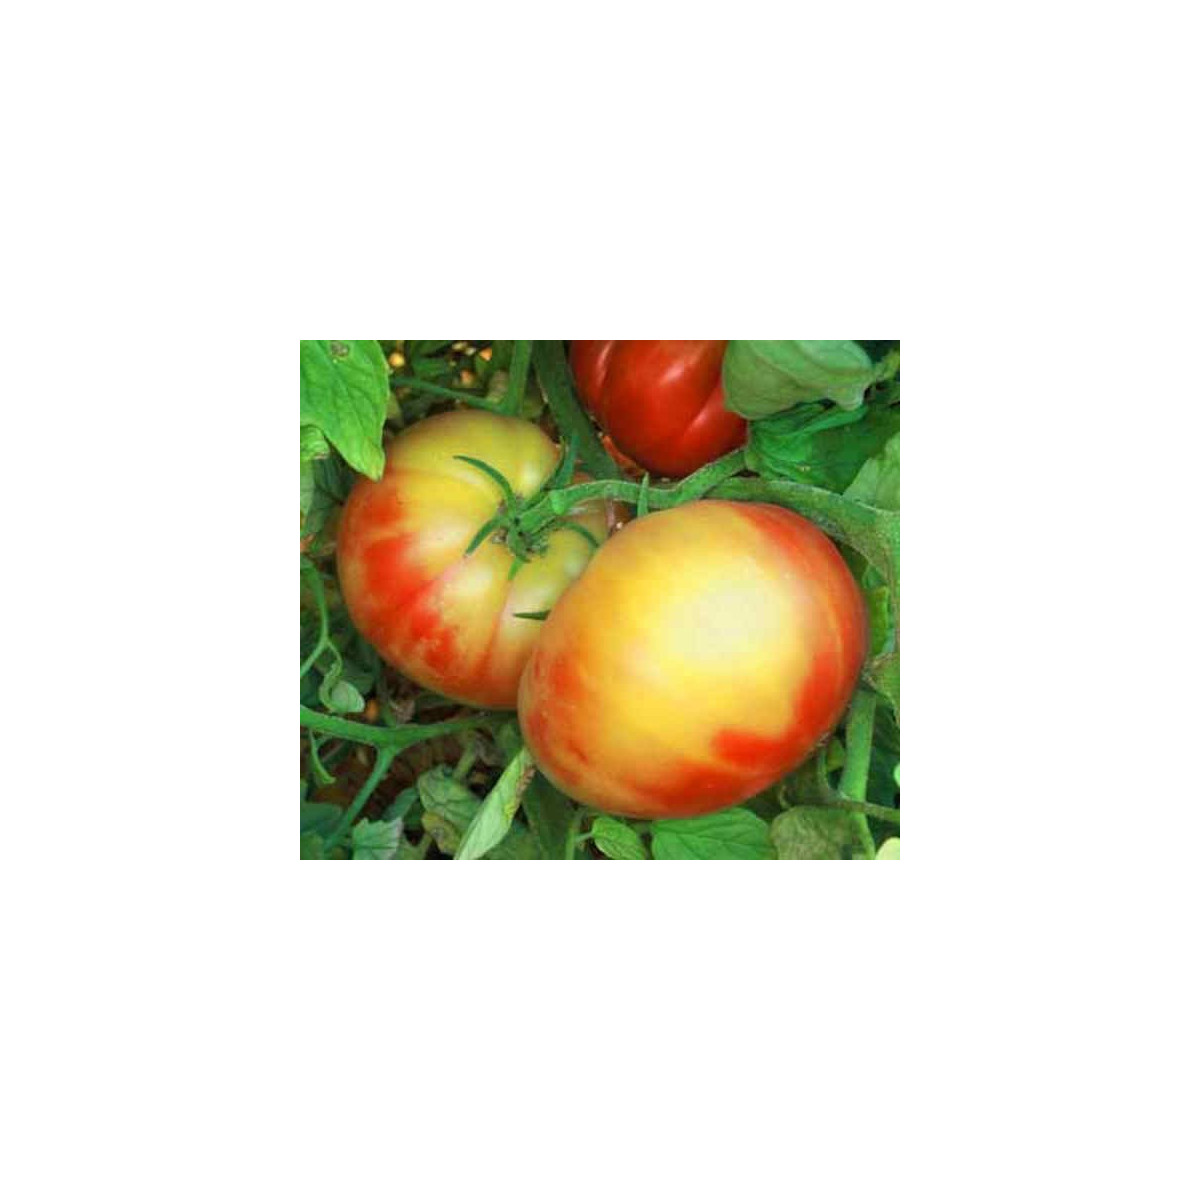 Rajče dvoubarevné - semena rajčete - 6 ks